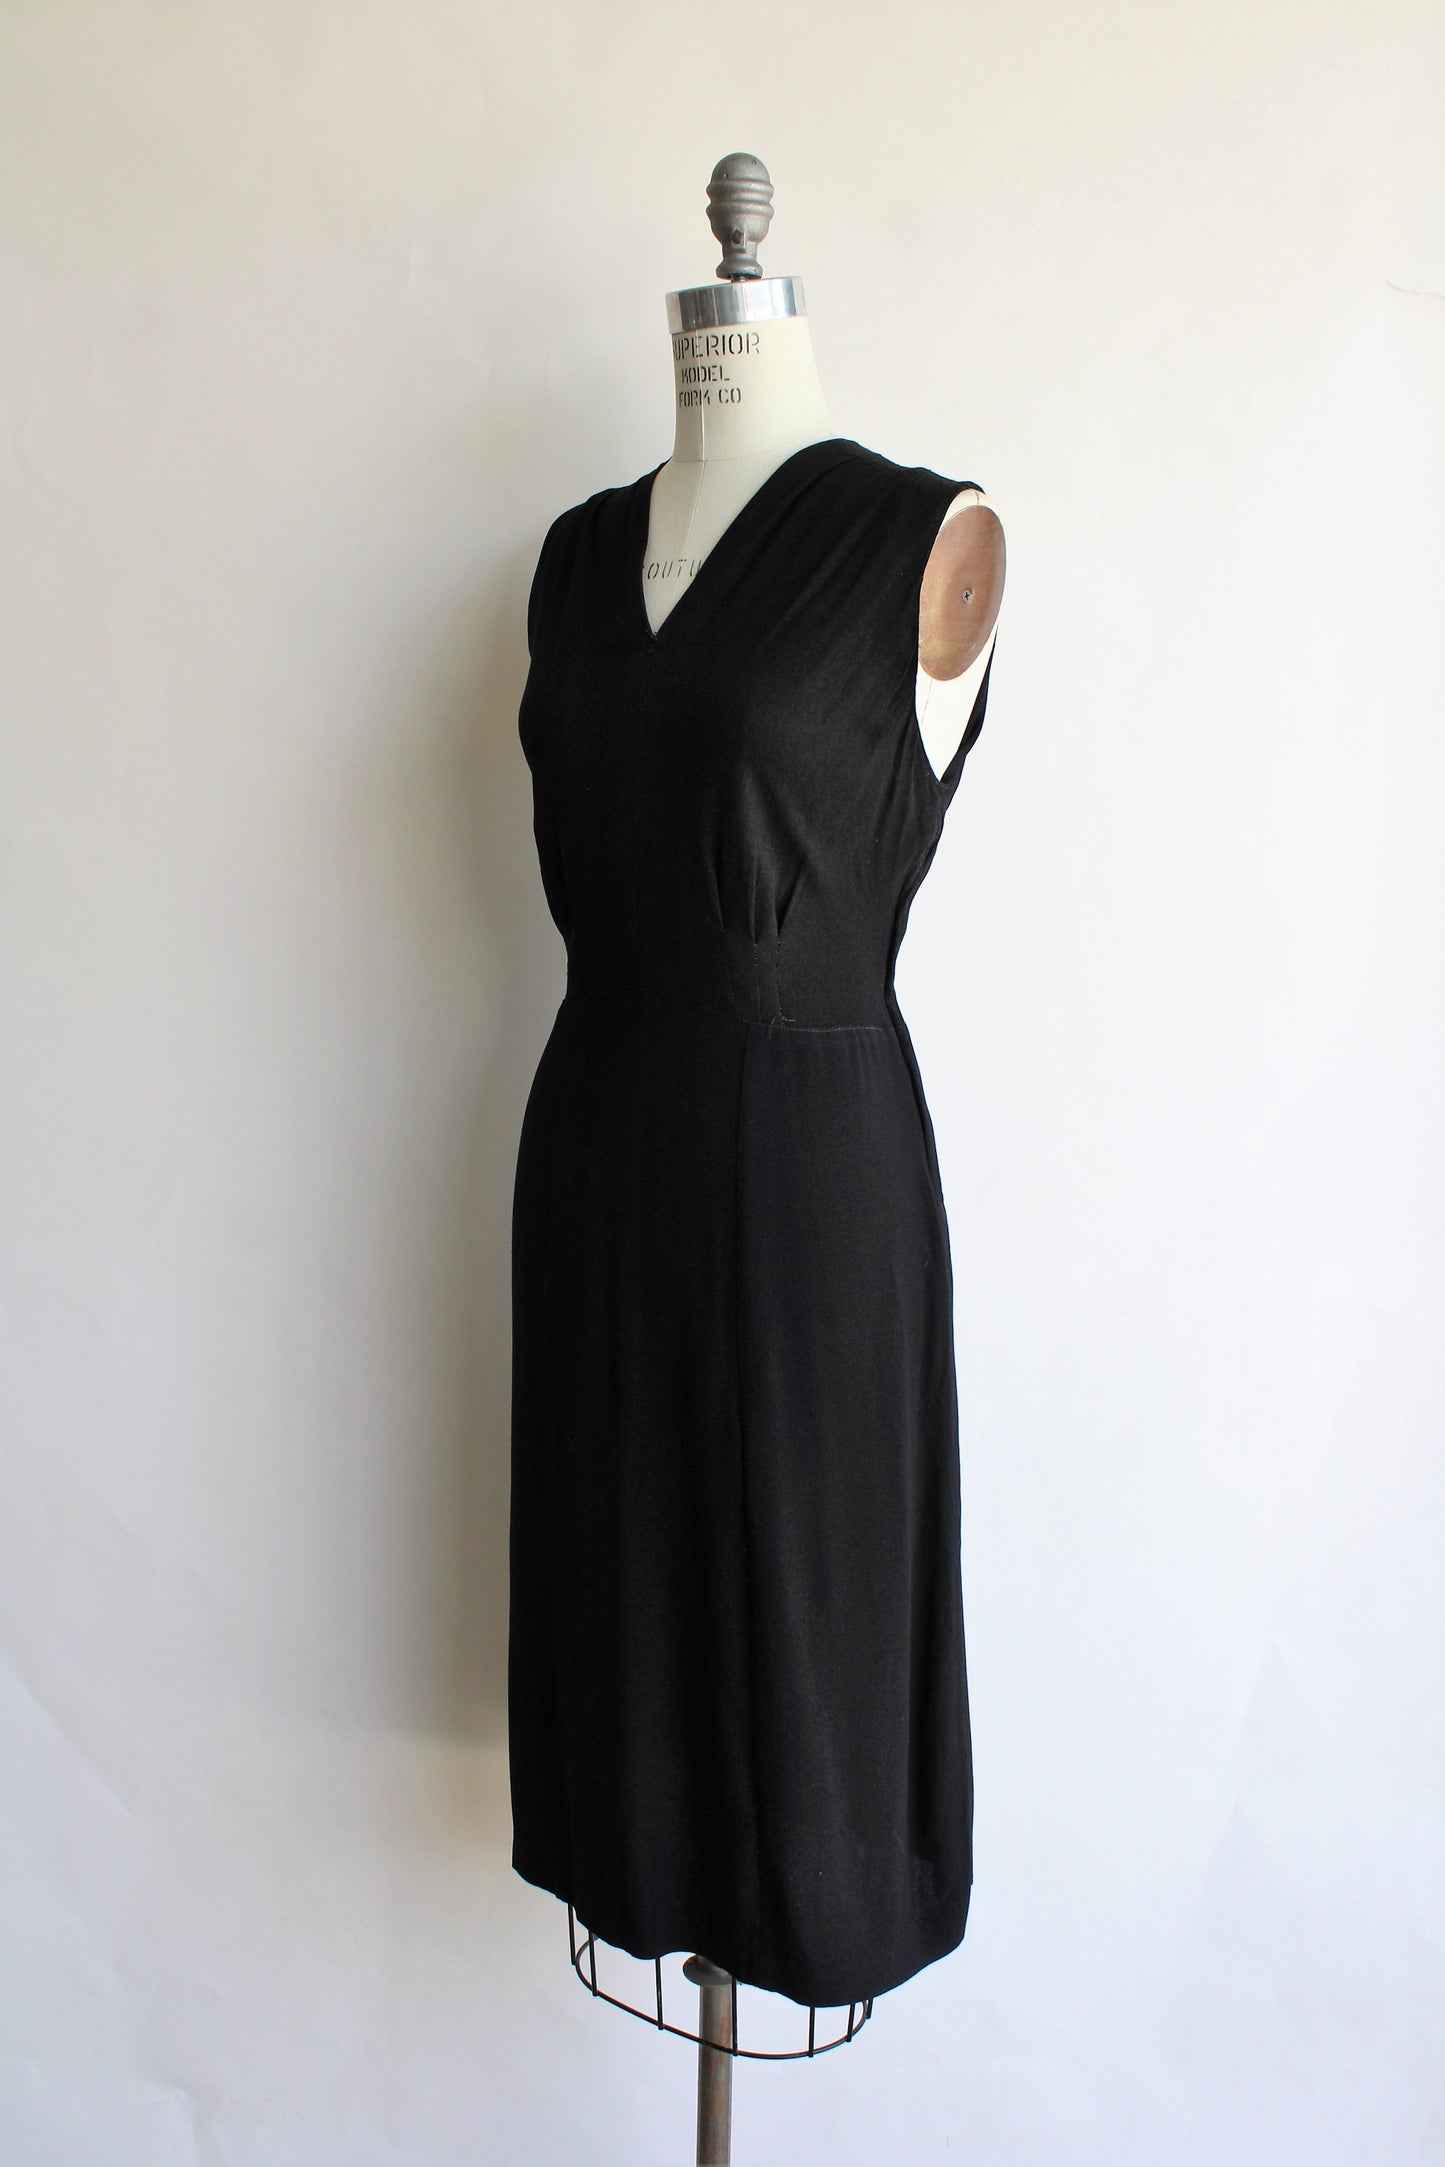 Vintage 1940s Black Rayon Sleeveless Dress